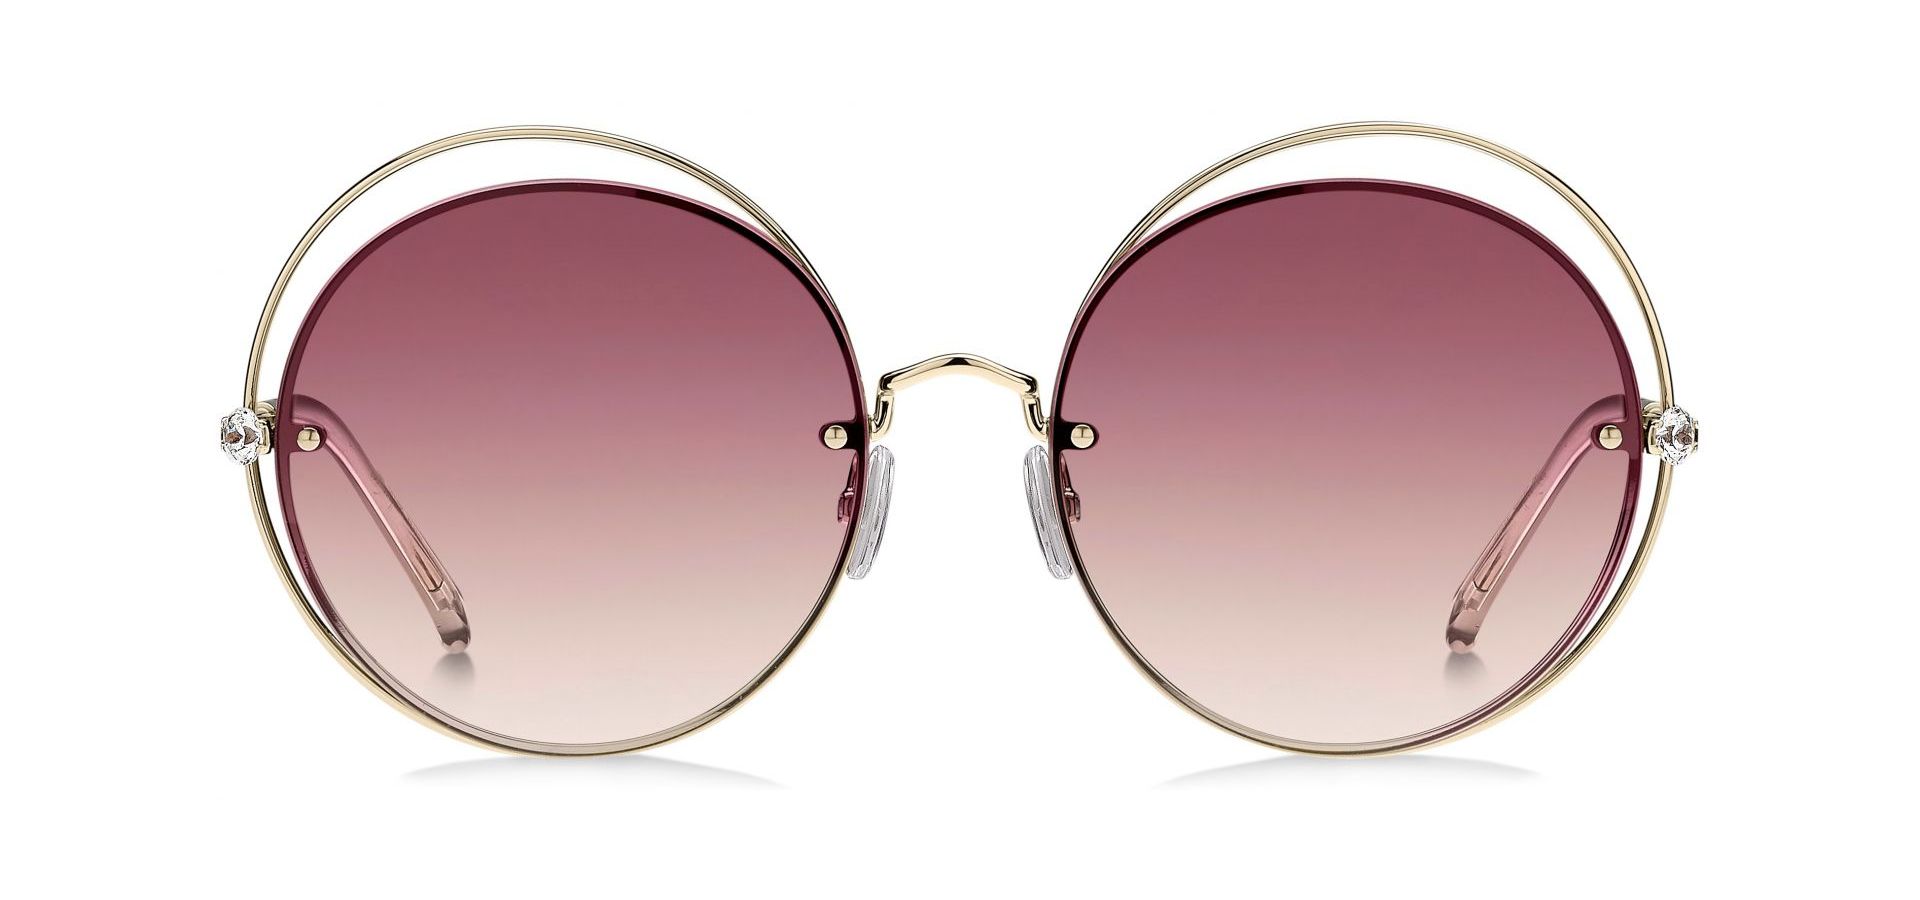 Sunčane naočale Max Mara MM SHINE: Boja: Pink w/ Gold, Veličina: 55-17-145, Spol: ženske, Materijal: metal